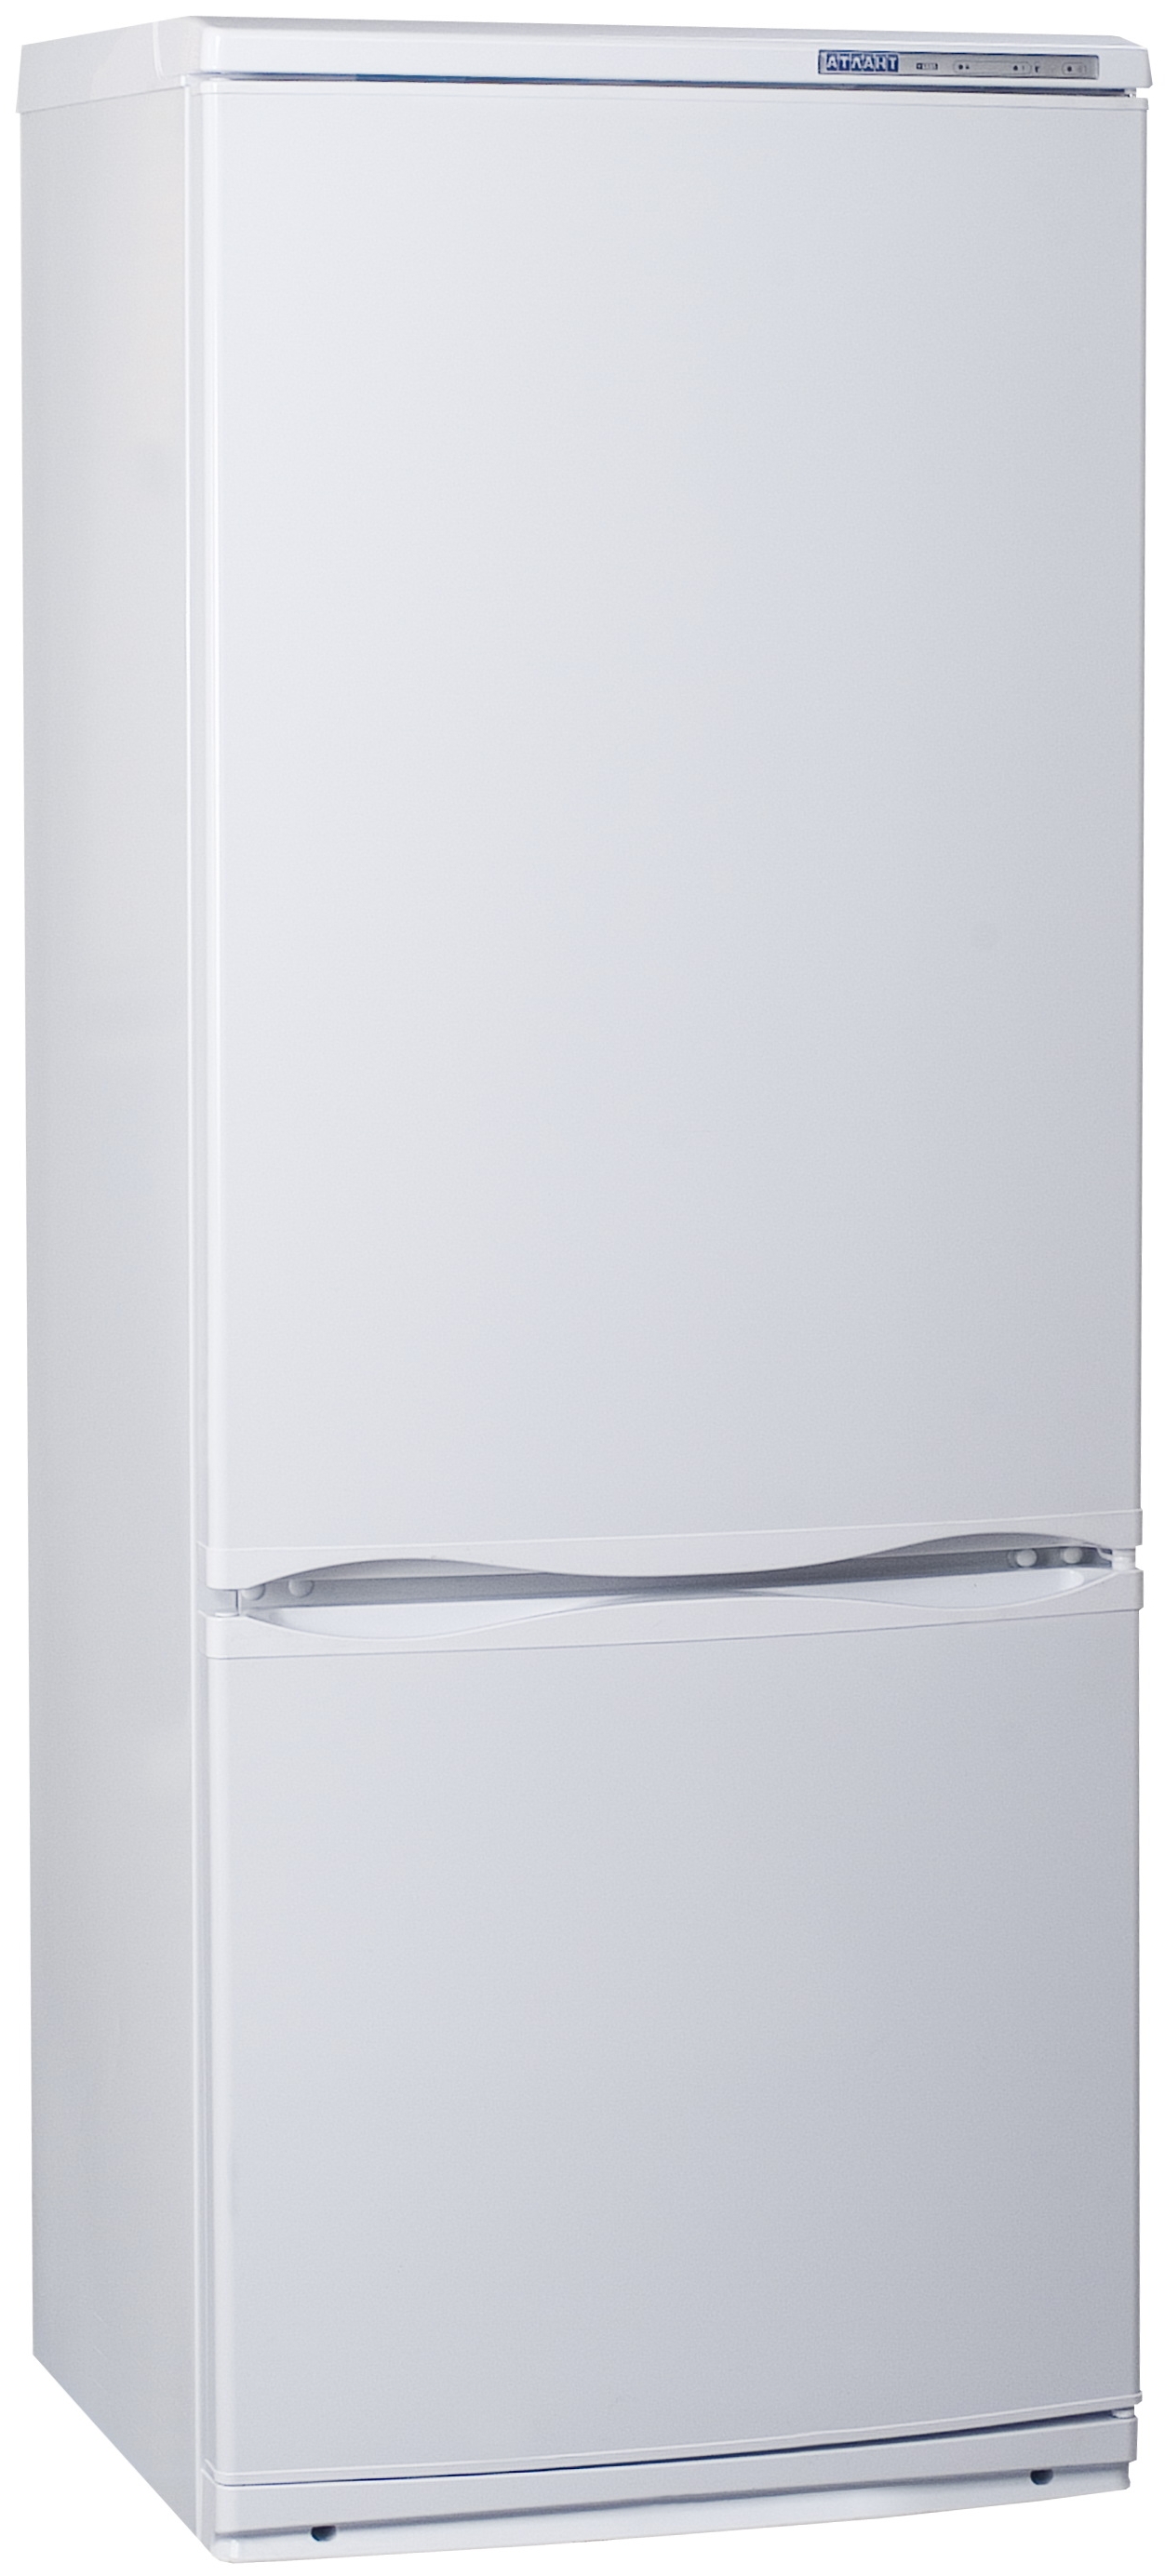 Холодильник ATLANT ХМ 4009-022 белый холодильник atlant хм 6025 060 двухкамерный класс а 384 л мокрый асфальт